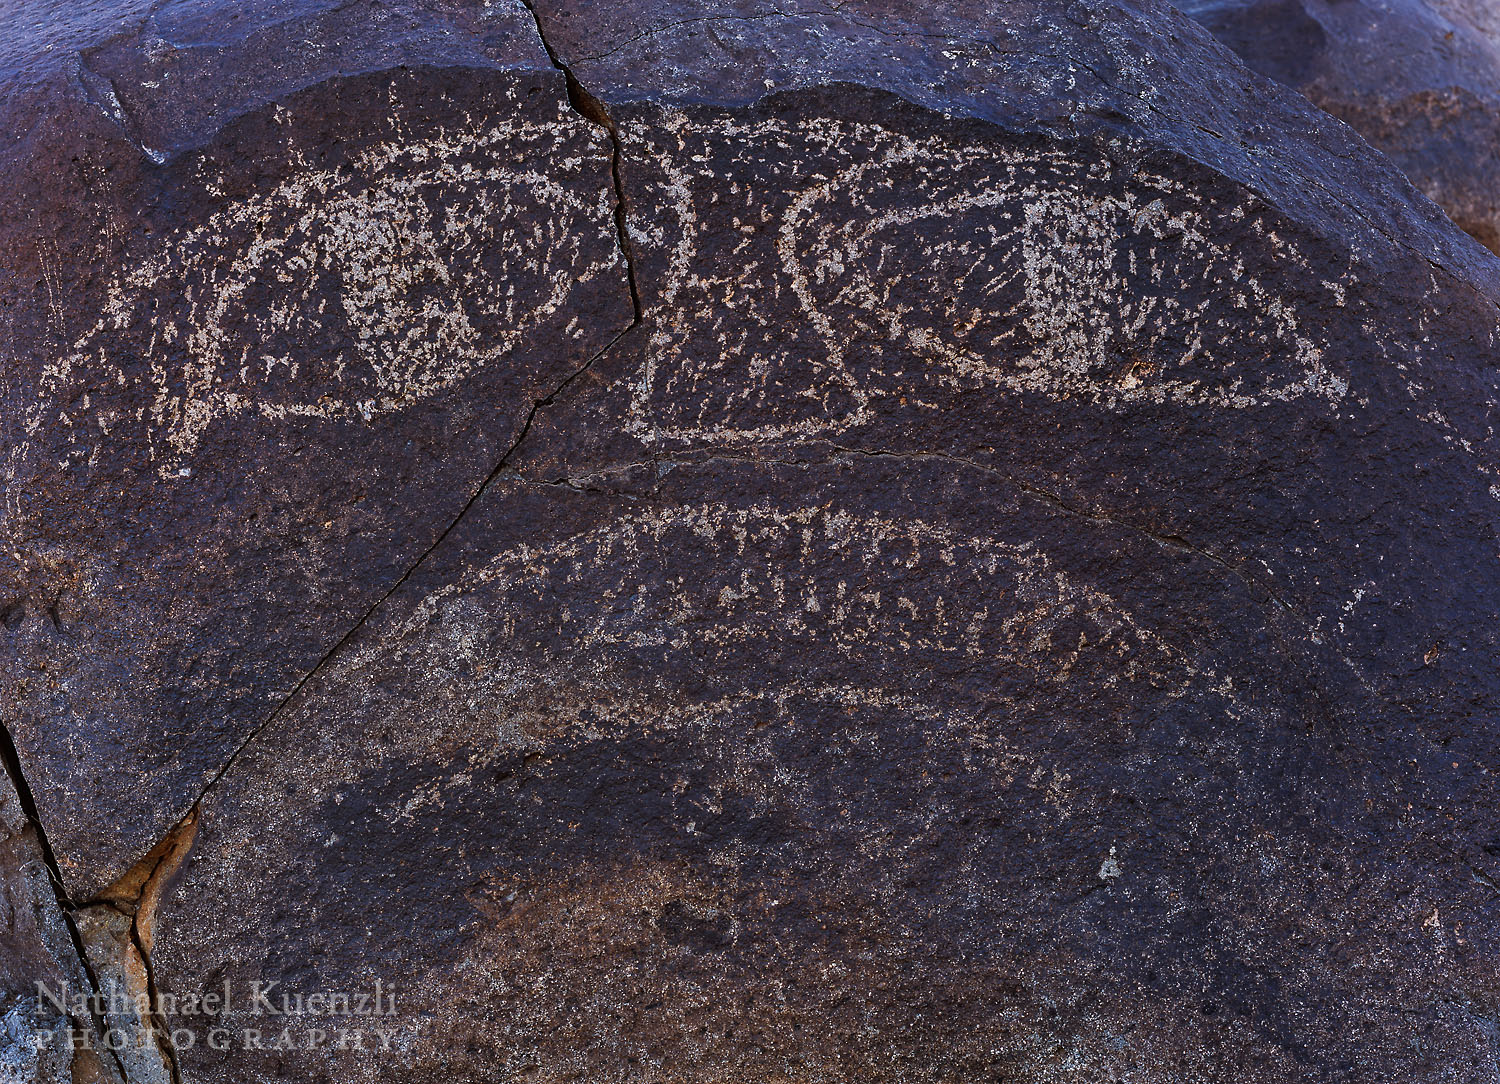   Petroglyph, Three Rivers, New Mexico, March 2008  